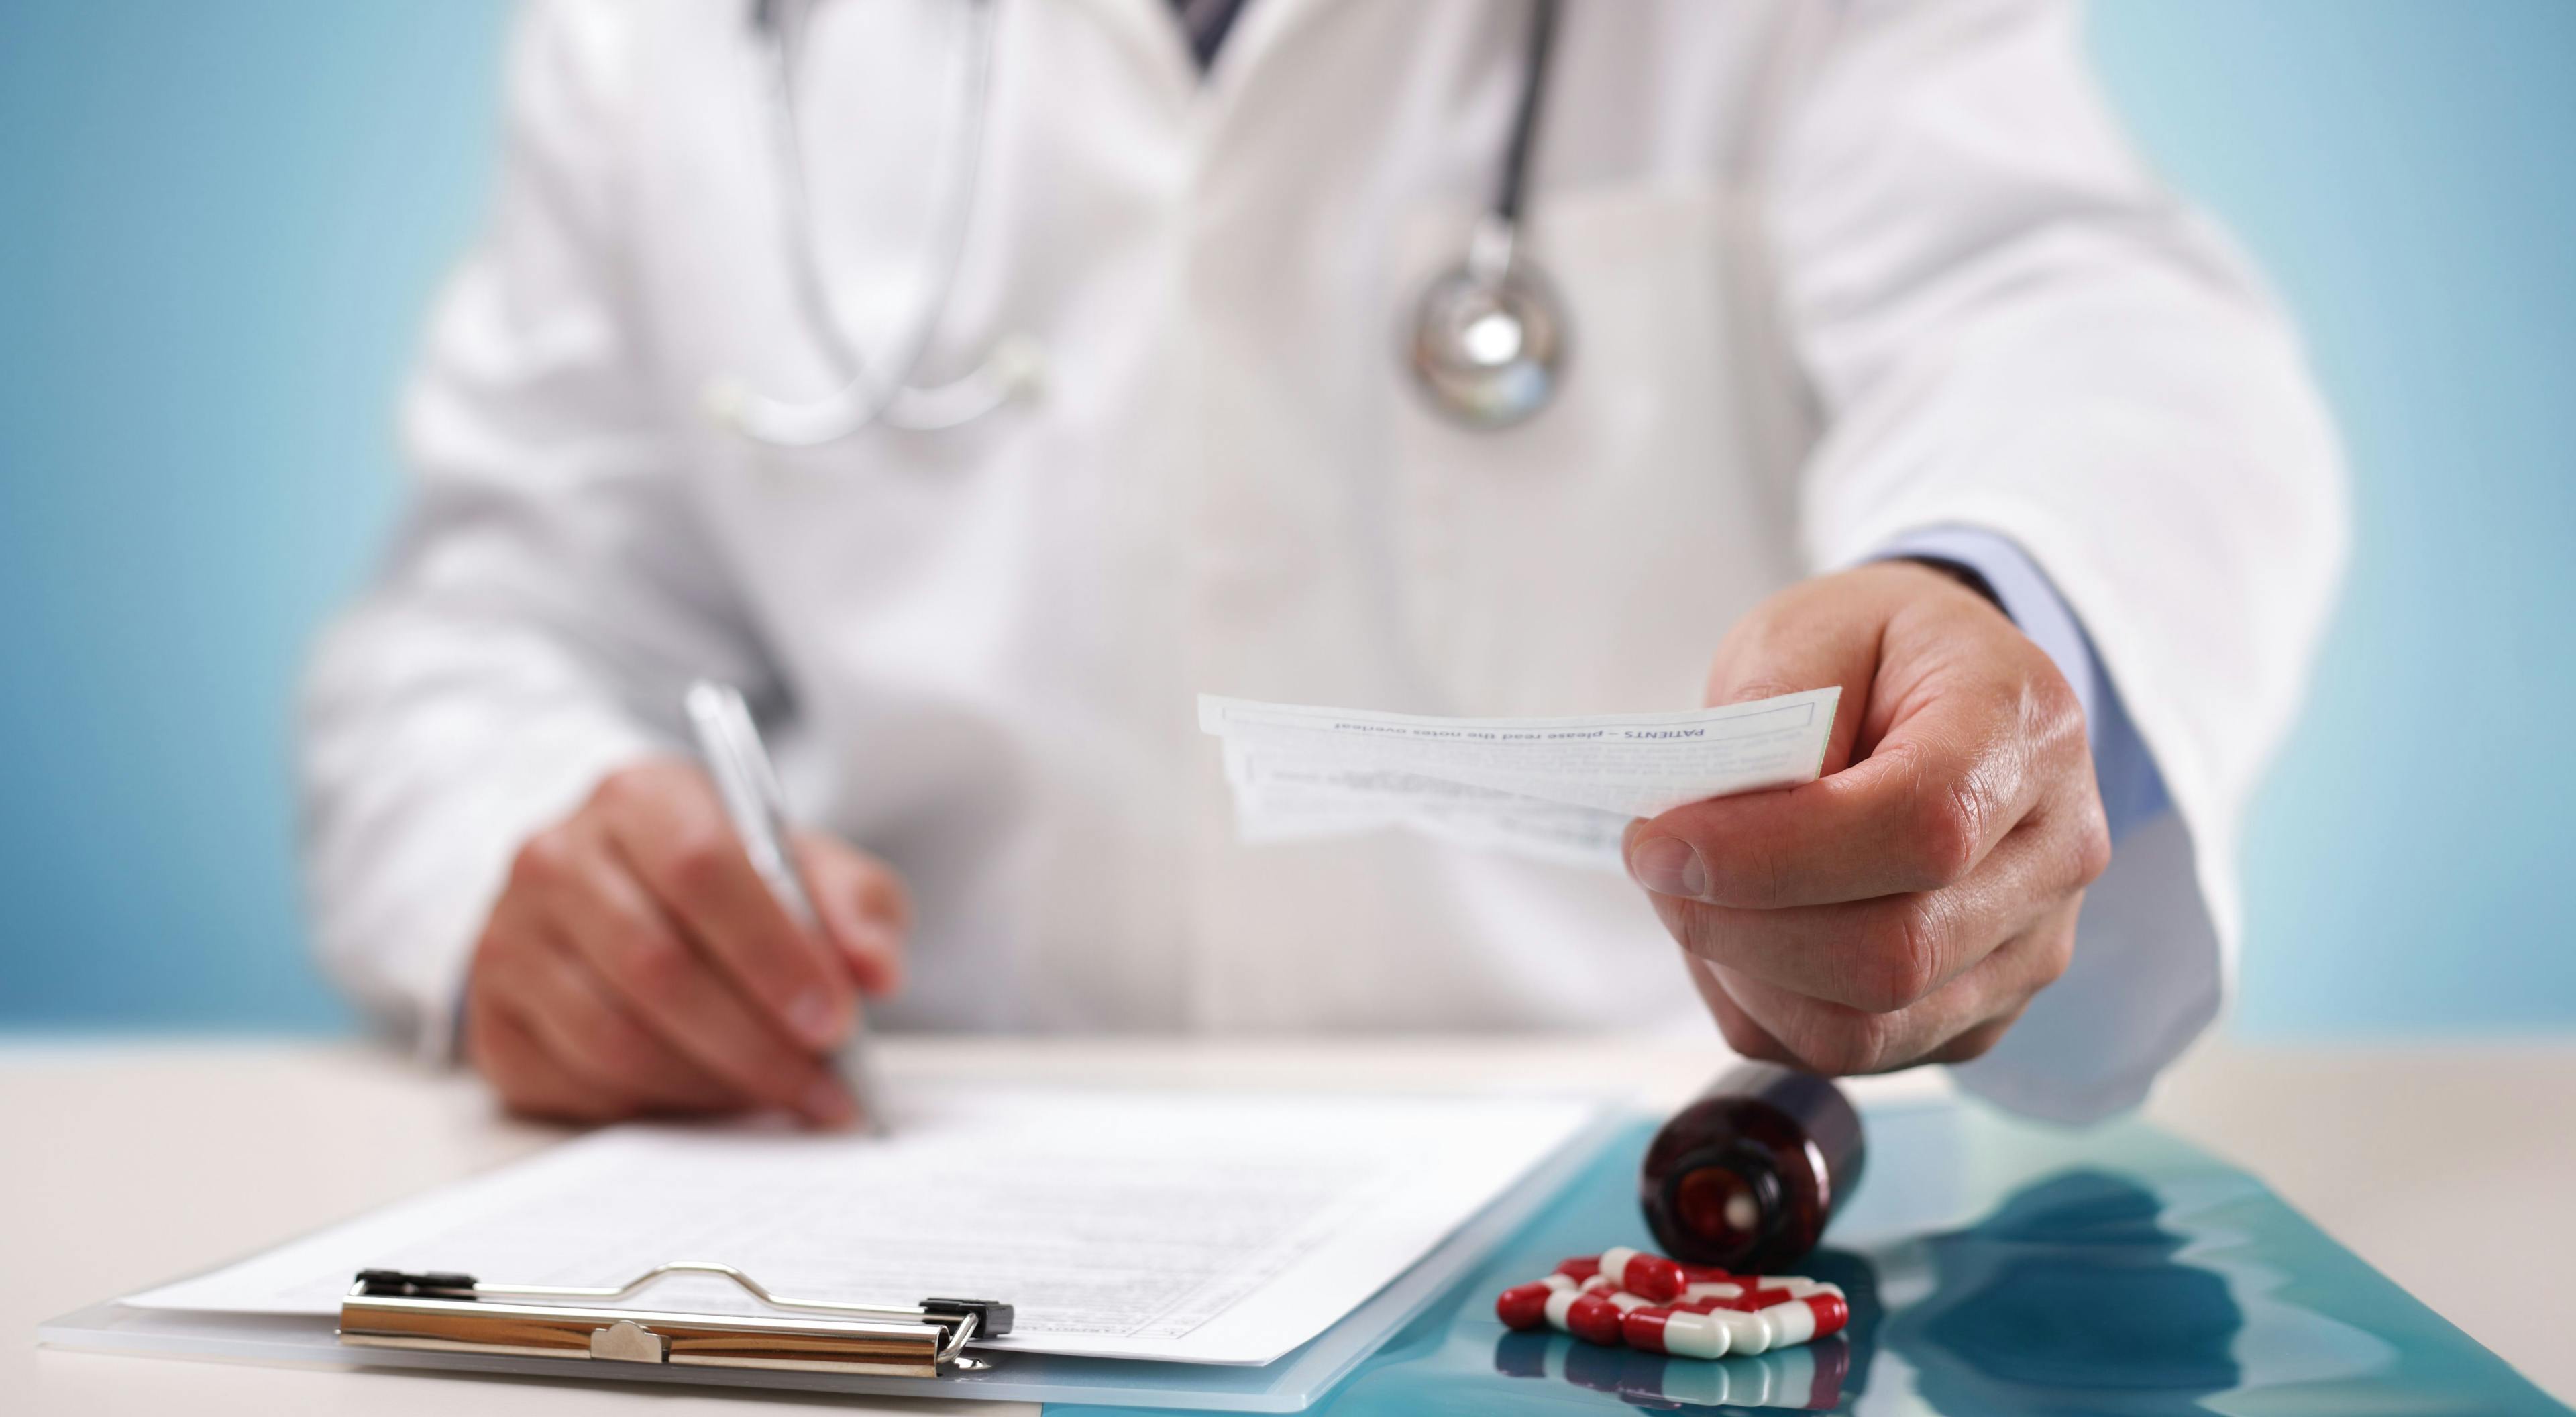 physician in a white coat handing a prescription